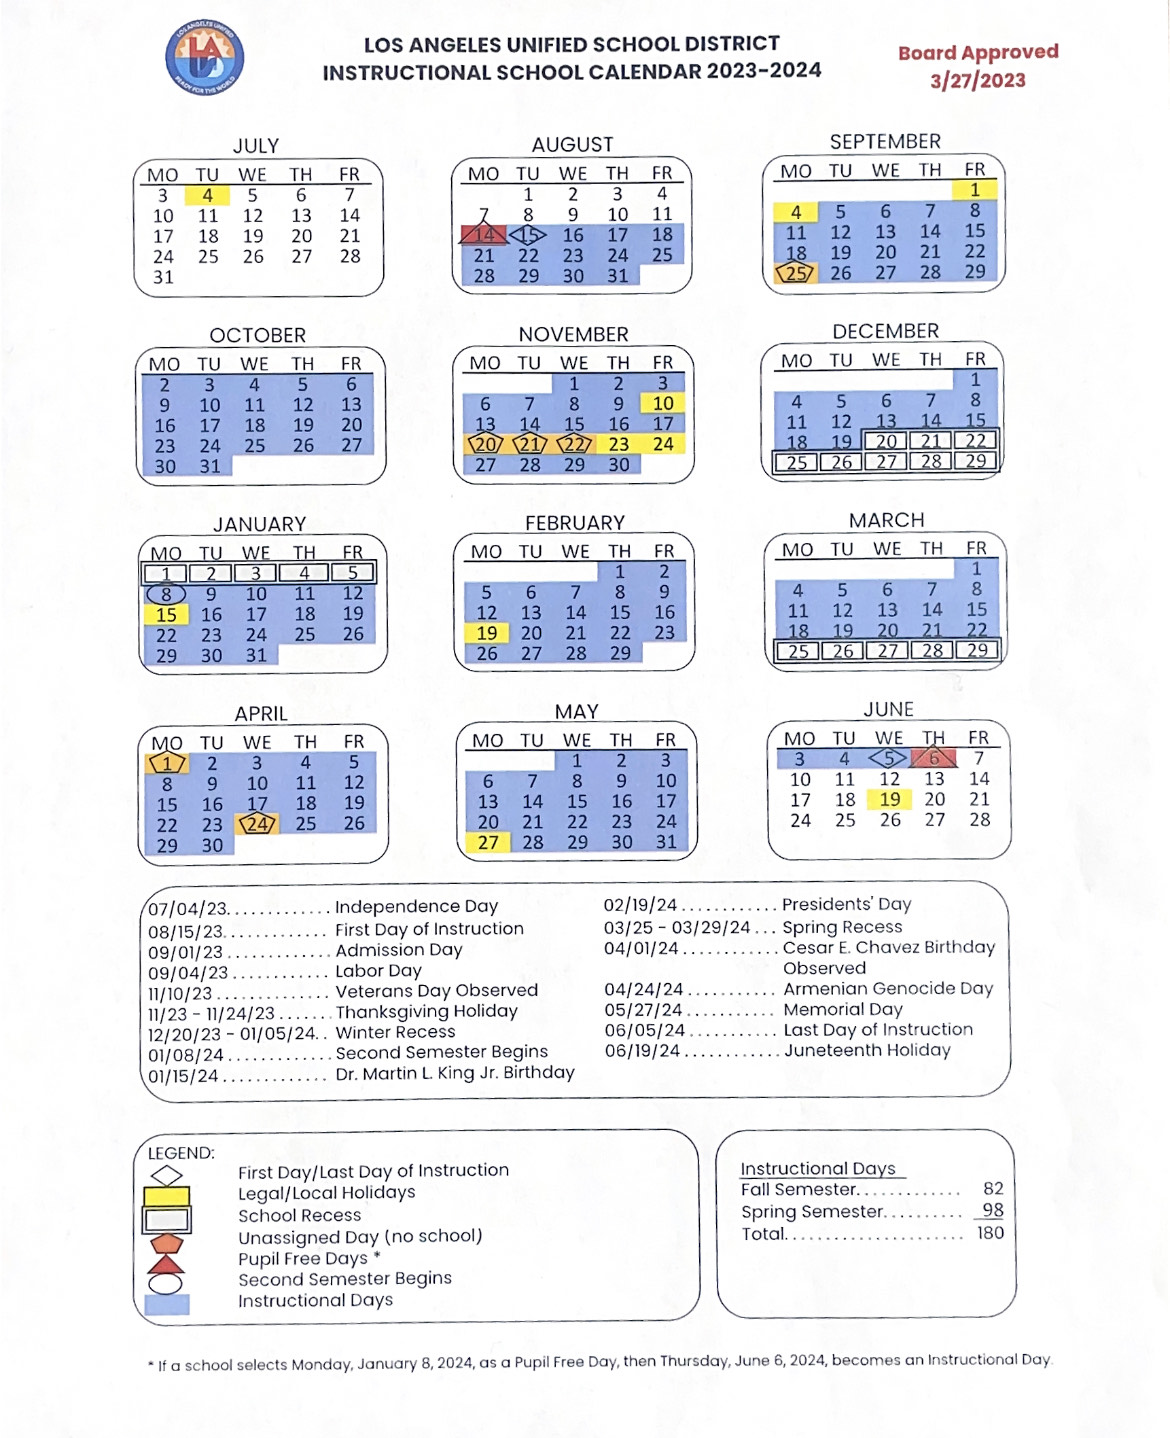 LAUSD new school calendar 2023 2024 The Federalist